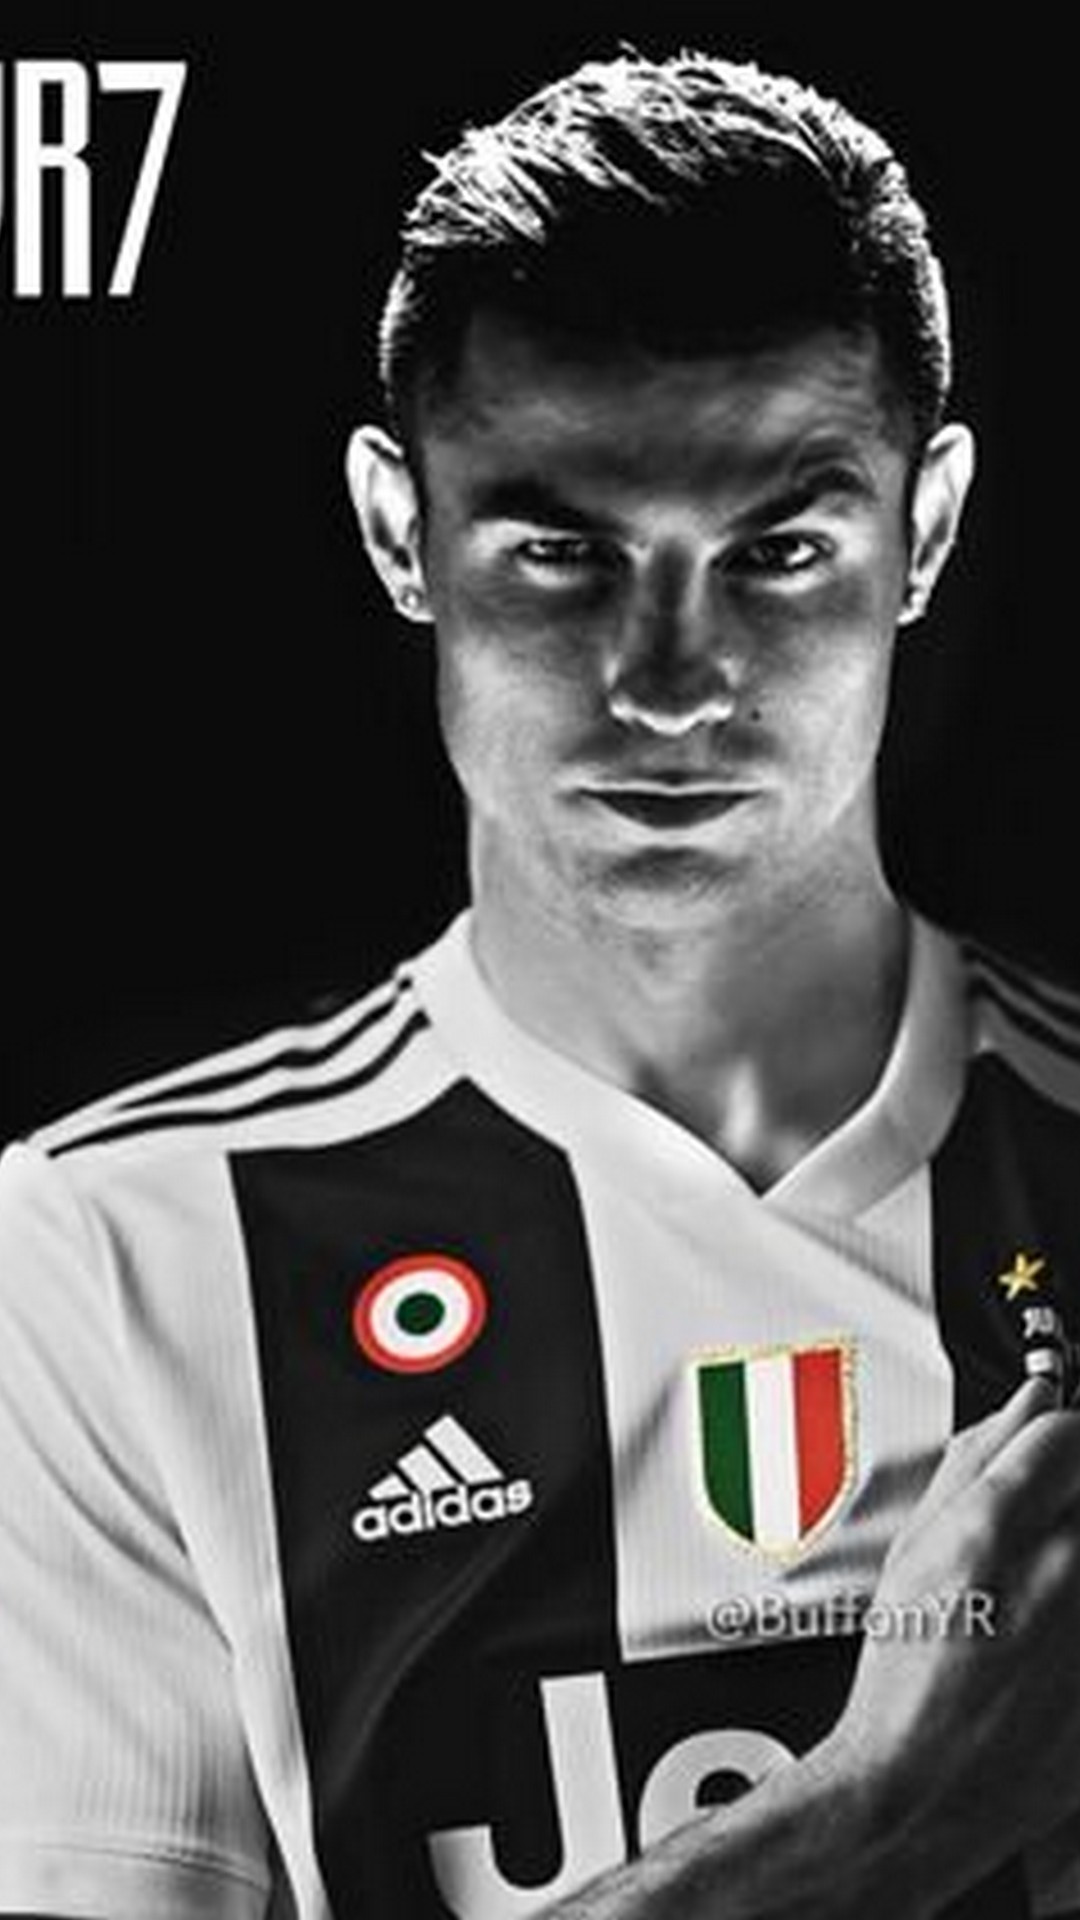 Cristiano Ronaldo Juventus Wallpaper Android   2020 Android Wallpapers